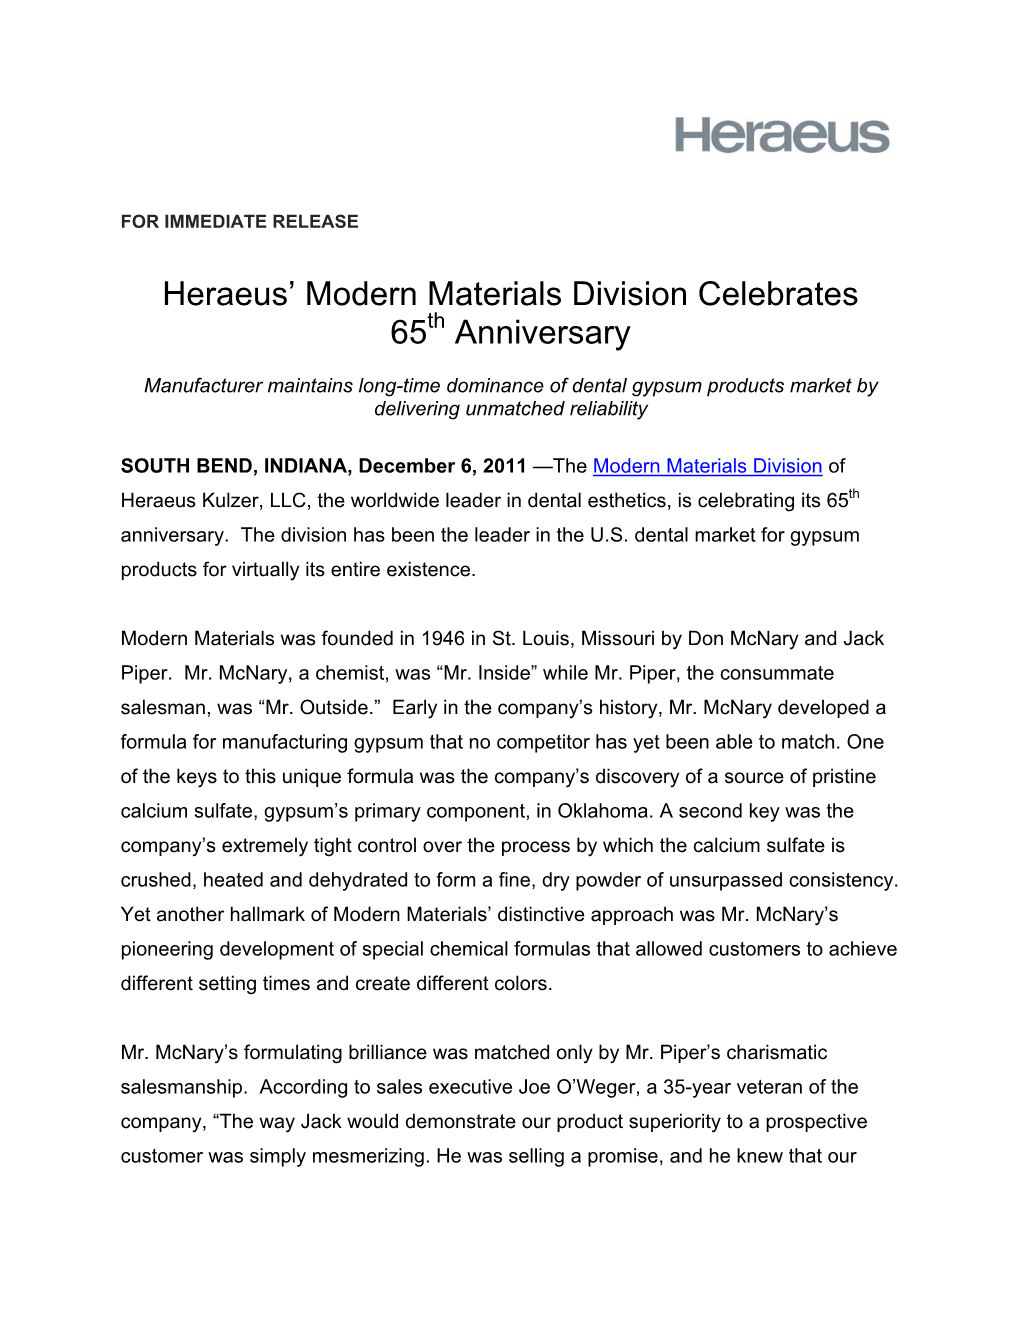 Heraeus' Modern Materials Division Celebrates 65 Anniversary